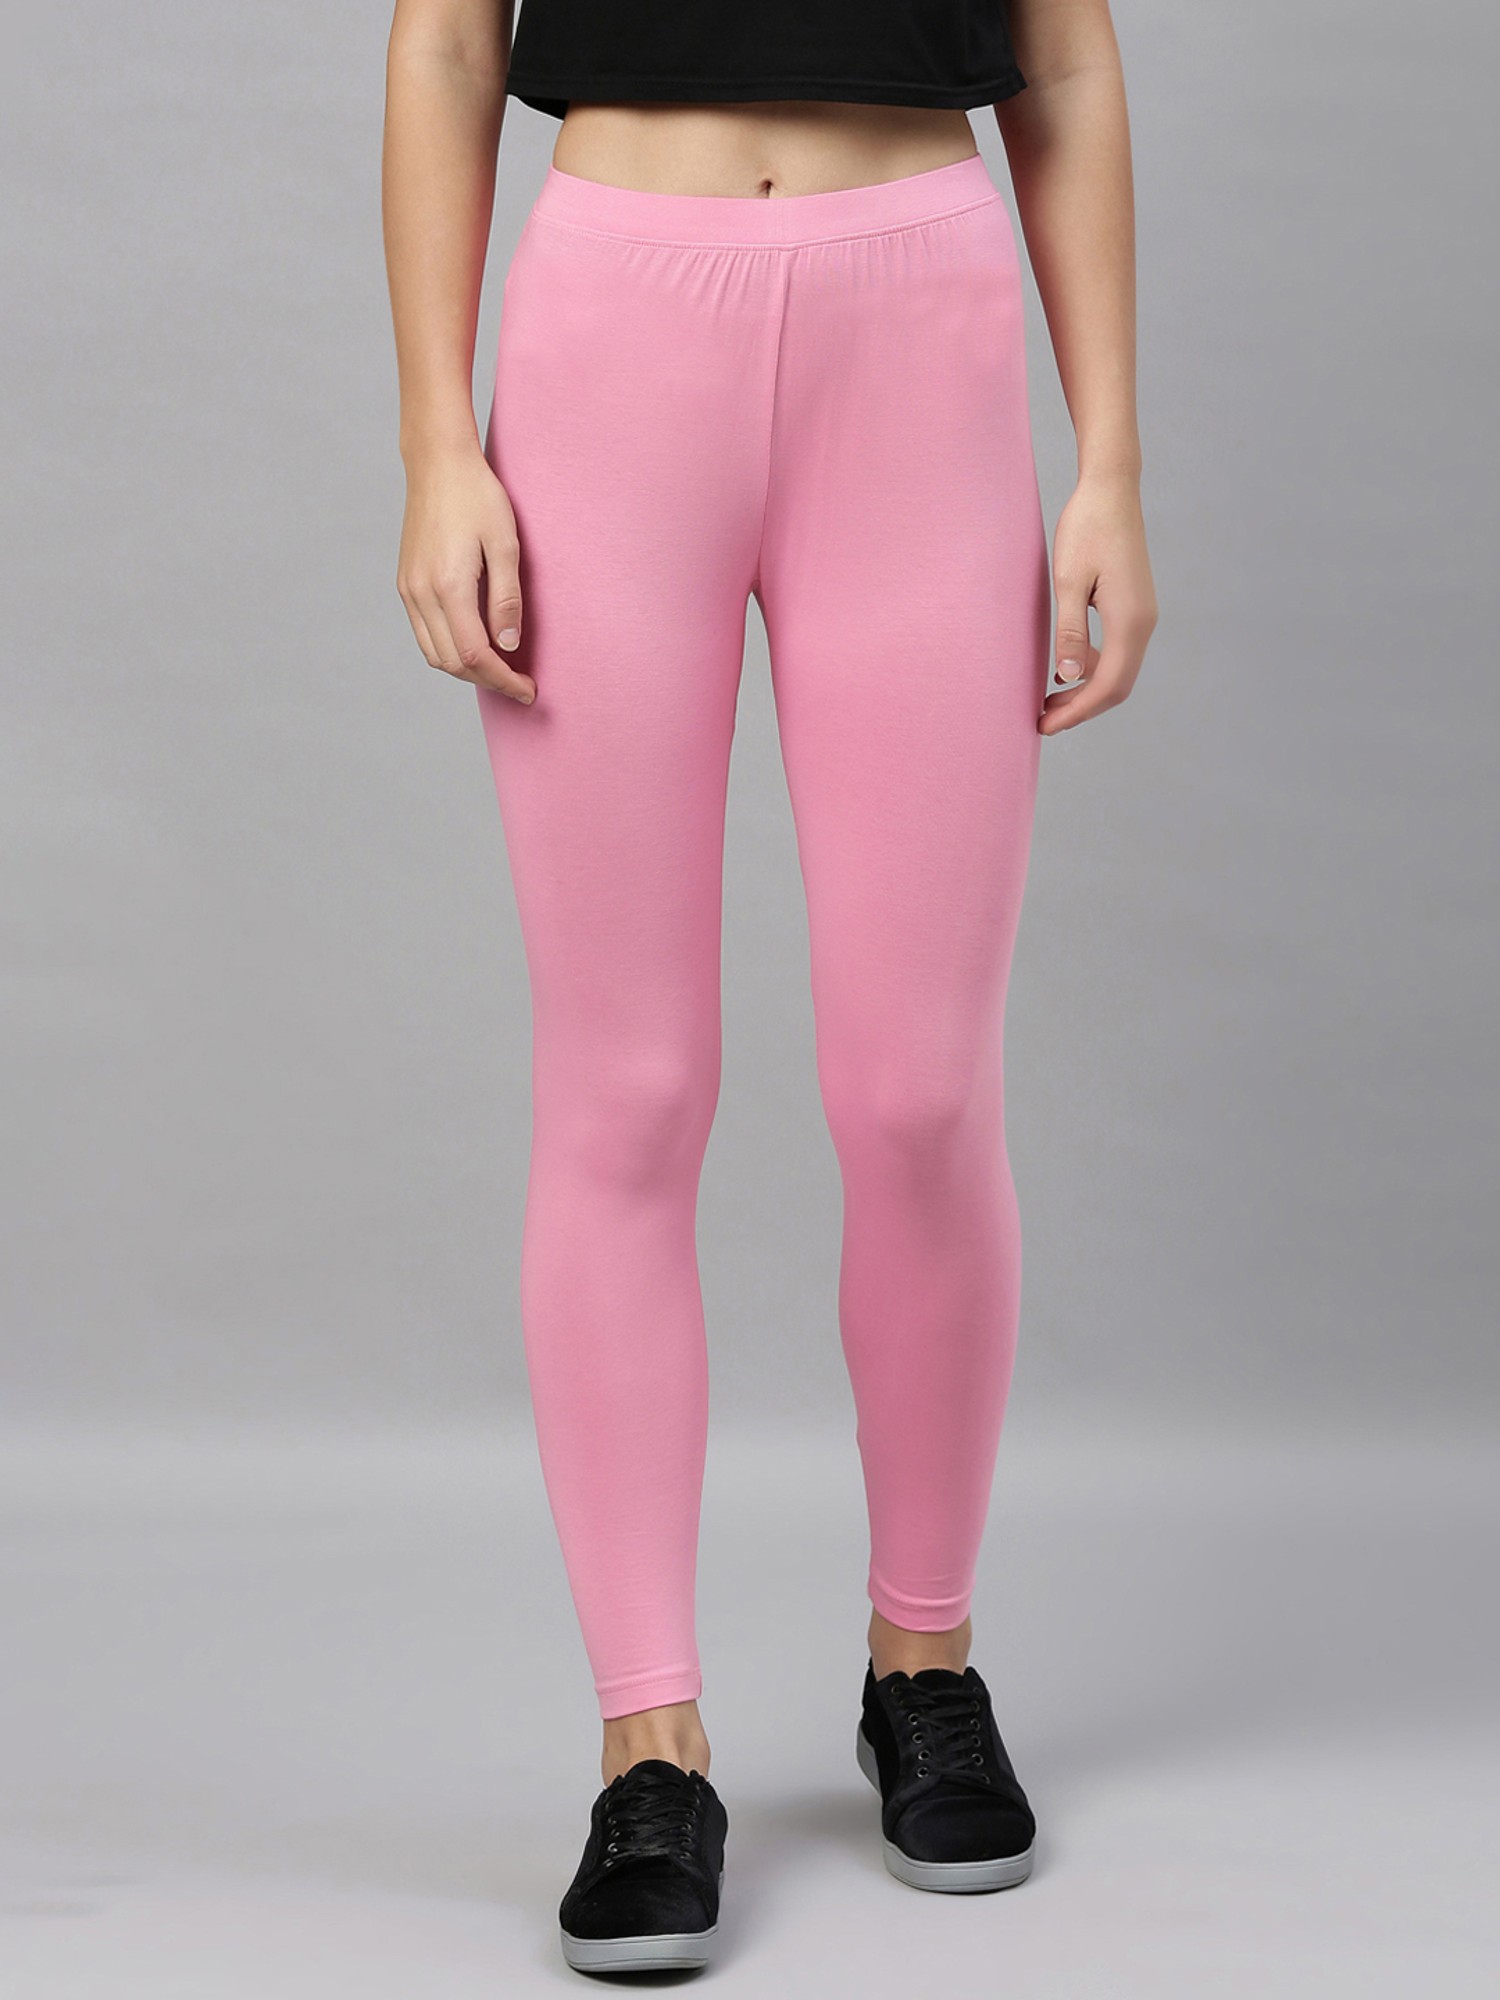 Buy Pink Leggings for Women by Elleven Online | Ajio.com